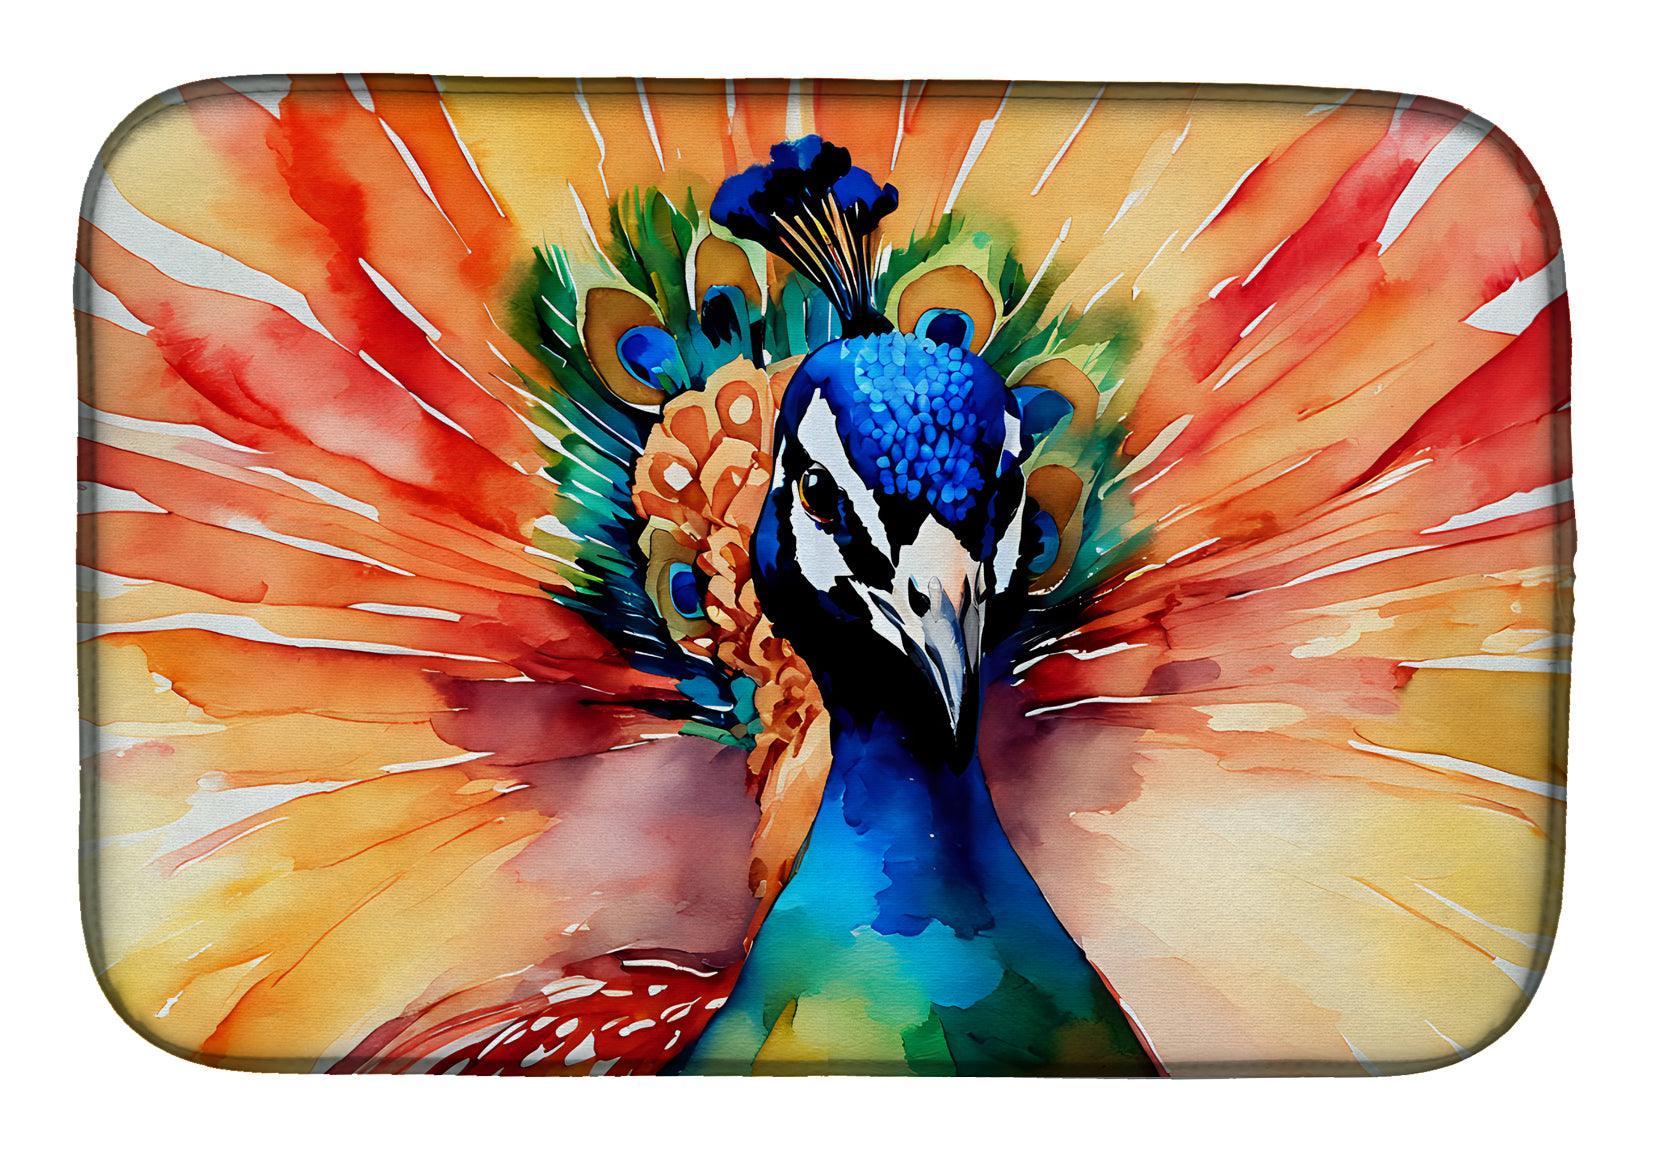 Buy this Peacock Dish Drying Mat